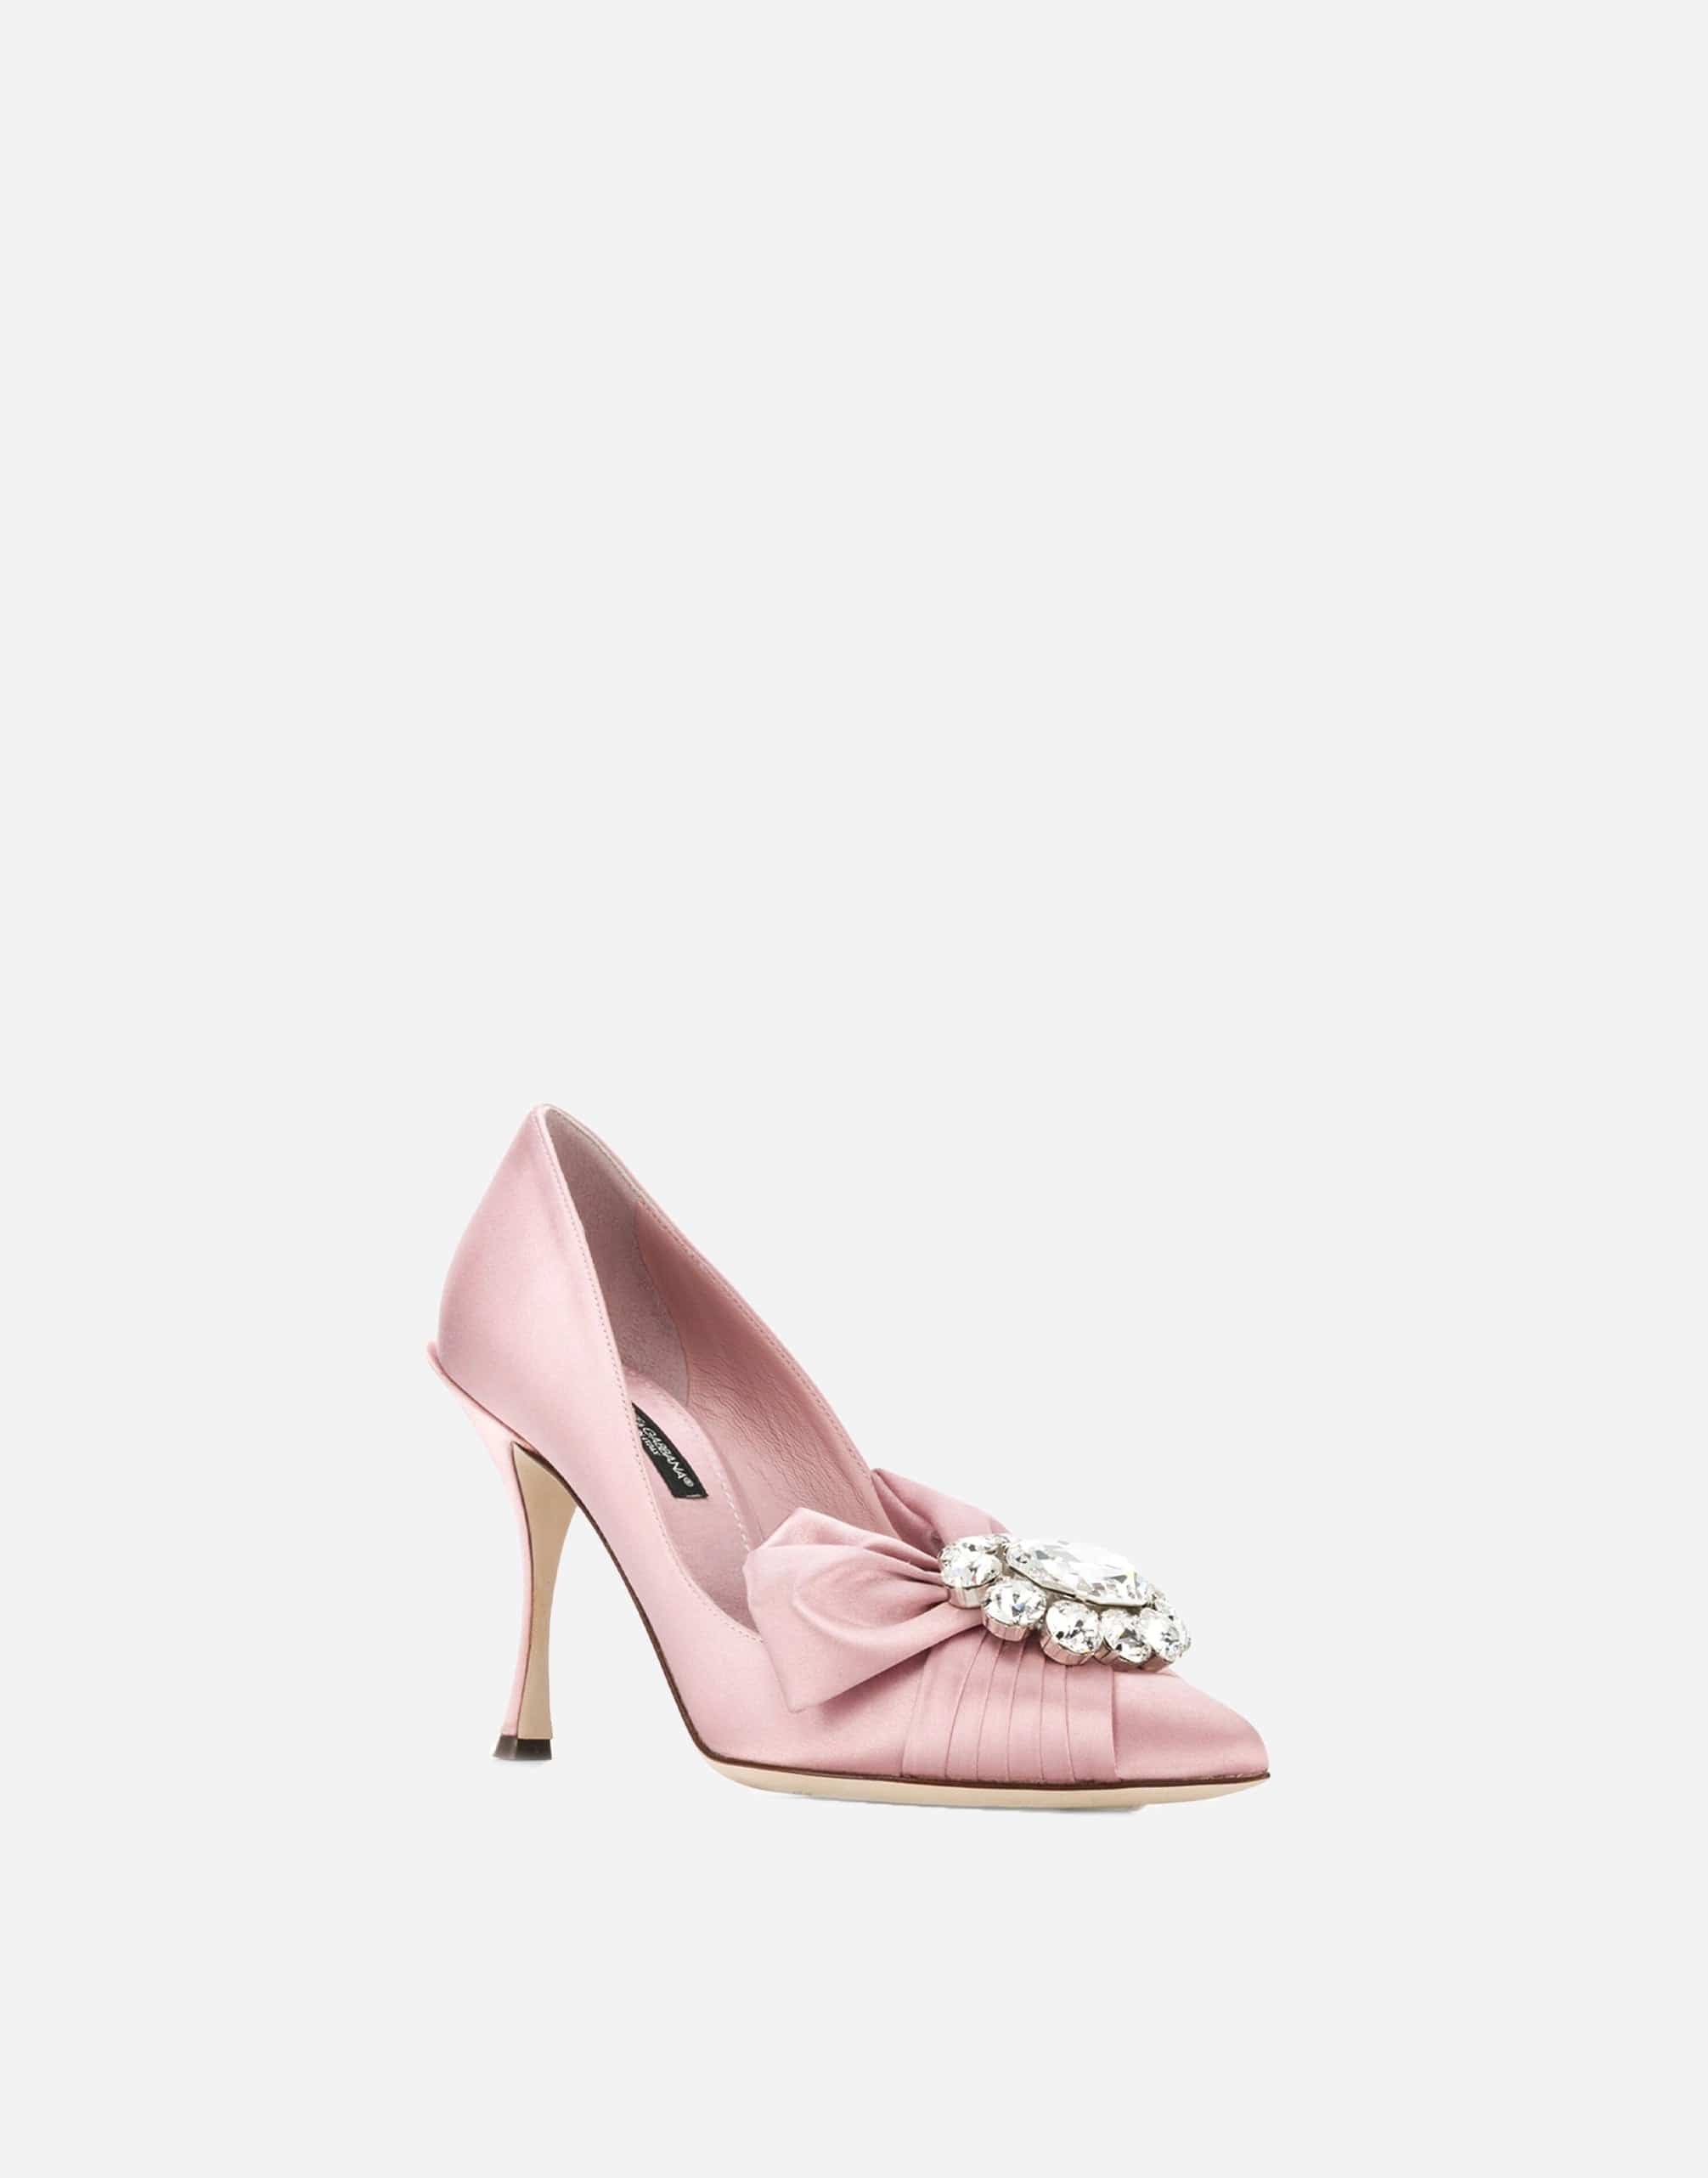 Dolce & Gabbana Pink Satin Crystal High Heels Pumps Shoes